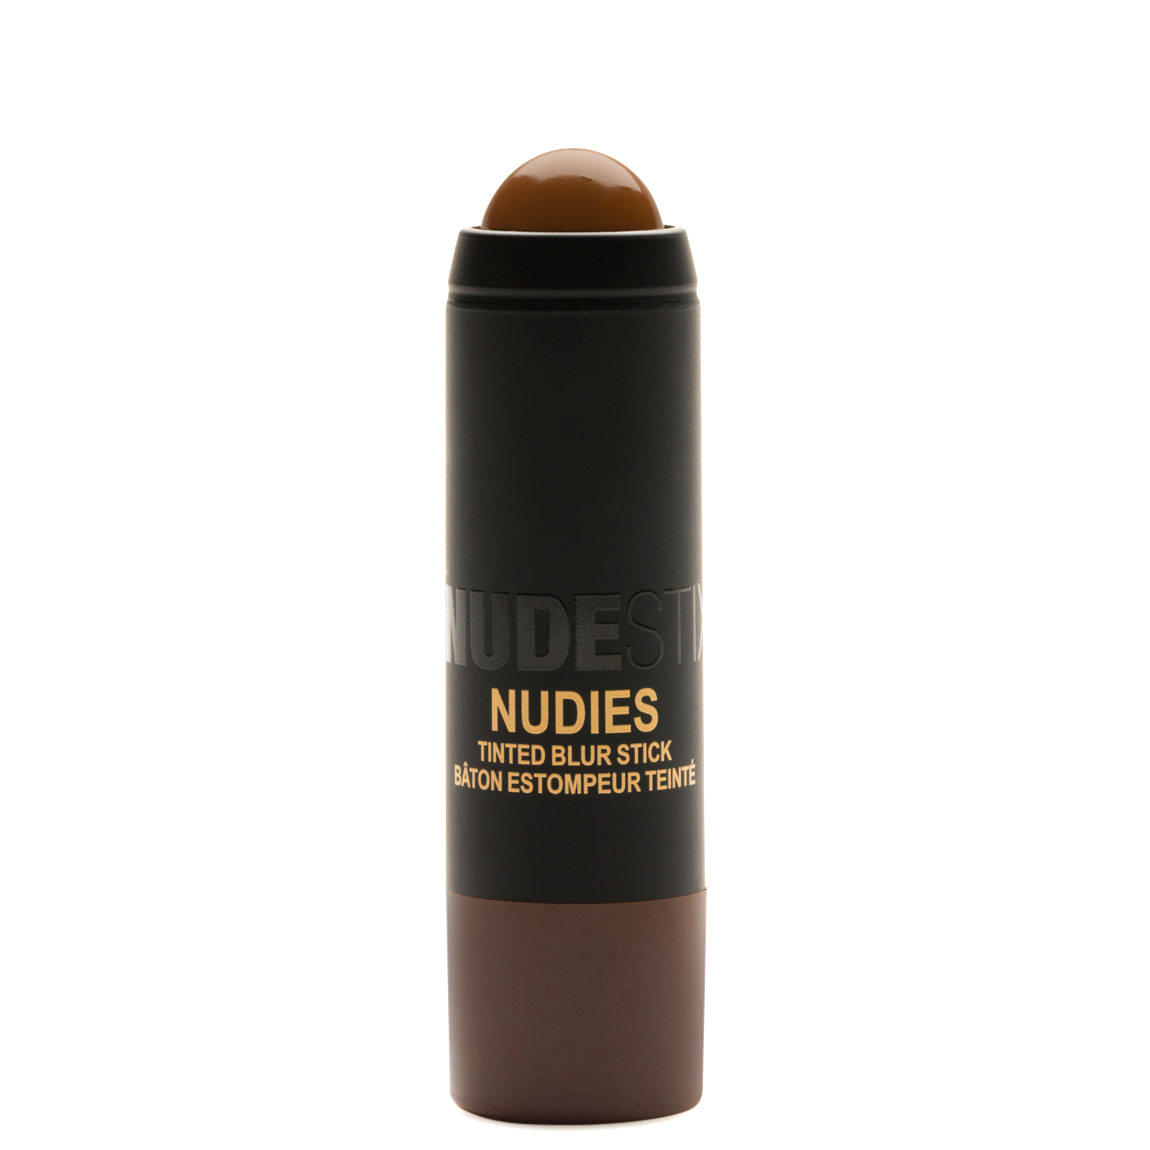 NudeStix Nudies Tinted Blur Stick Deep 9